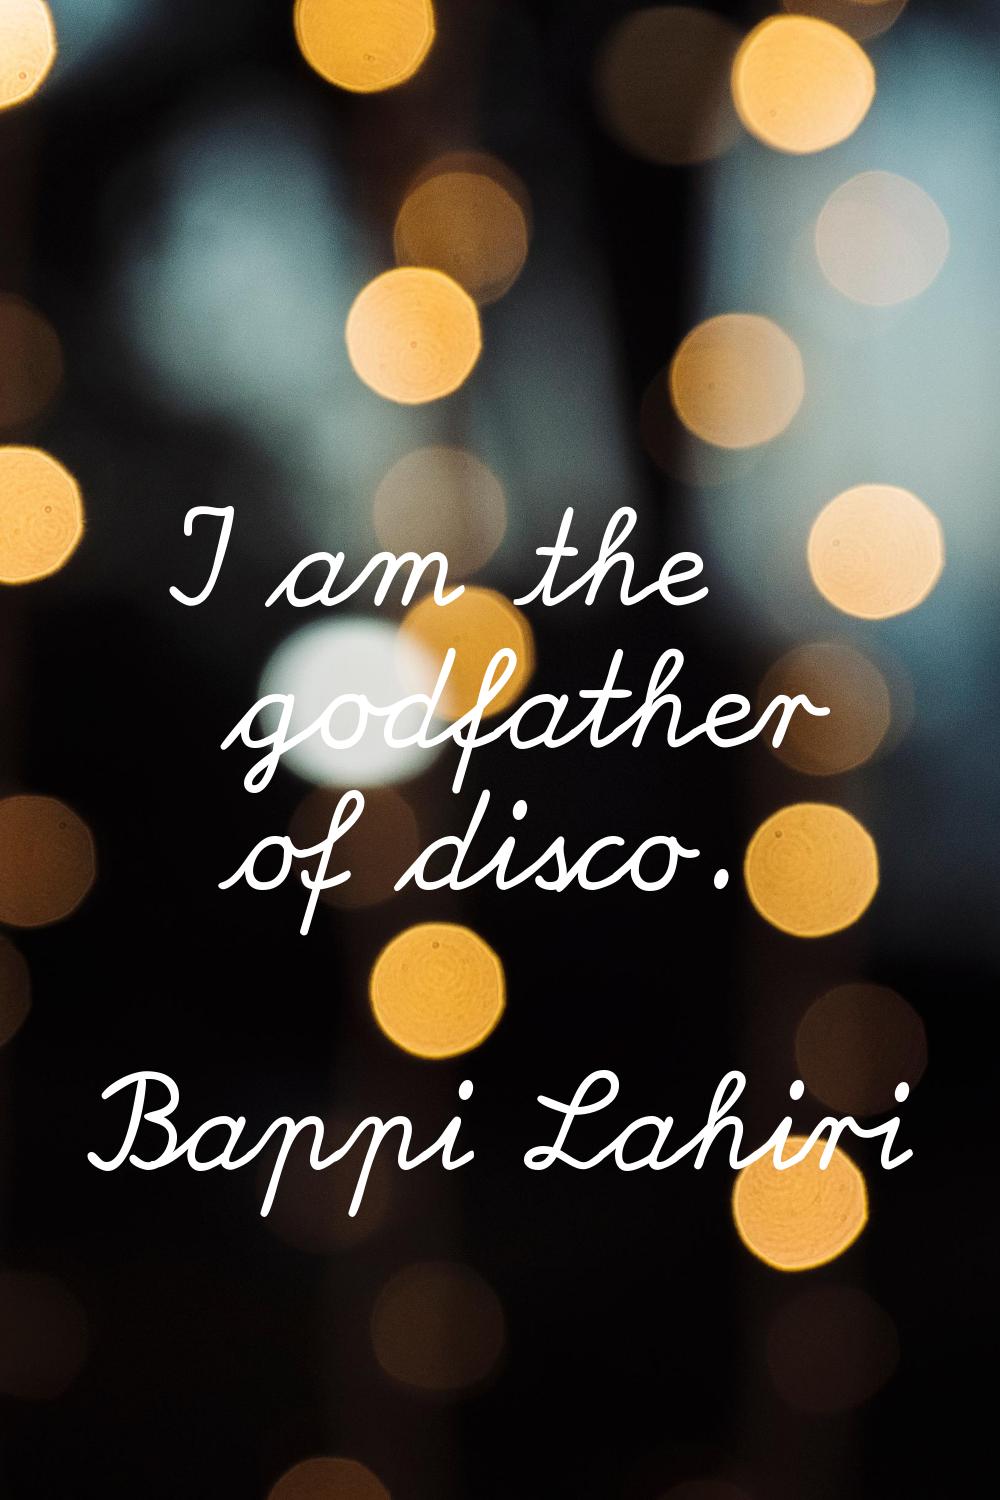 I am the godfather of disco.